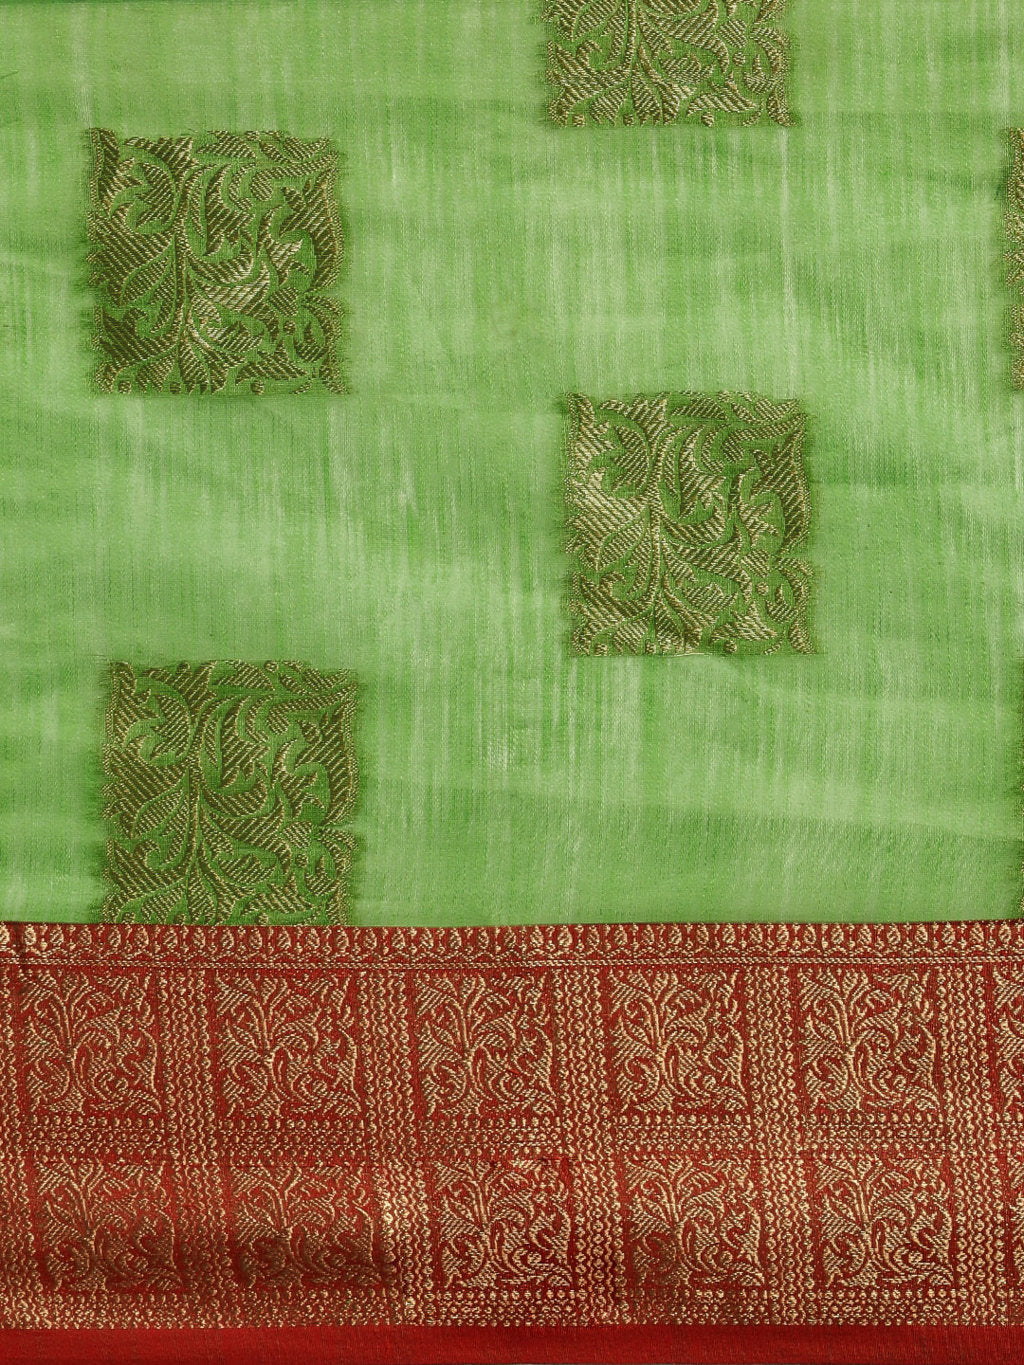 Women's Green Linen Woven Work Traditional Saree - Sangam Prints